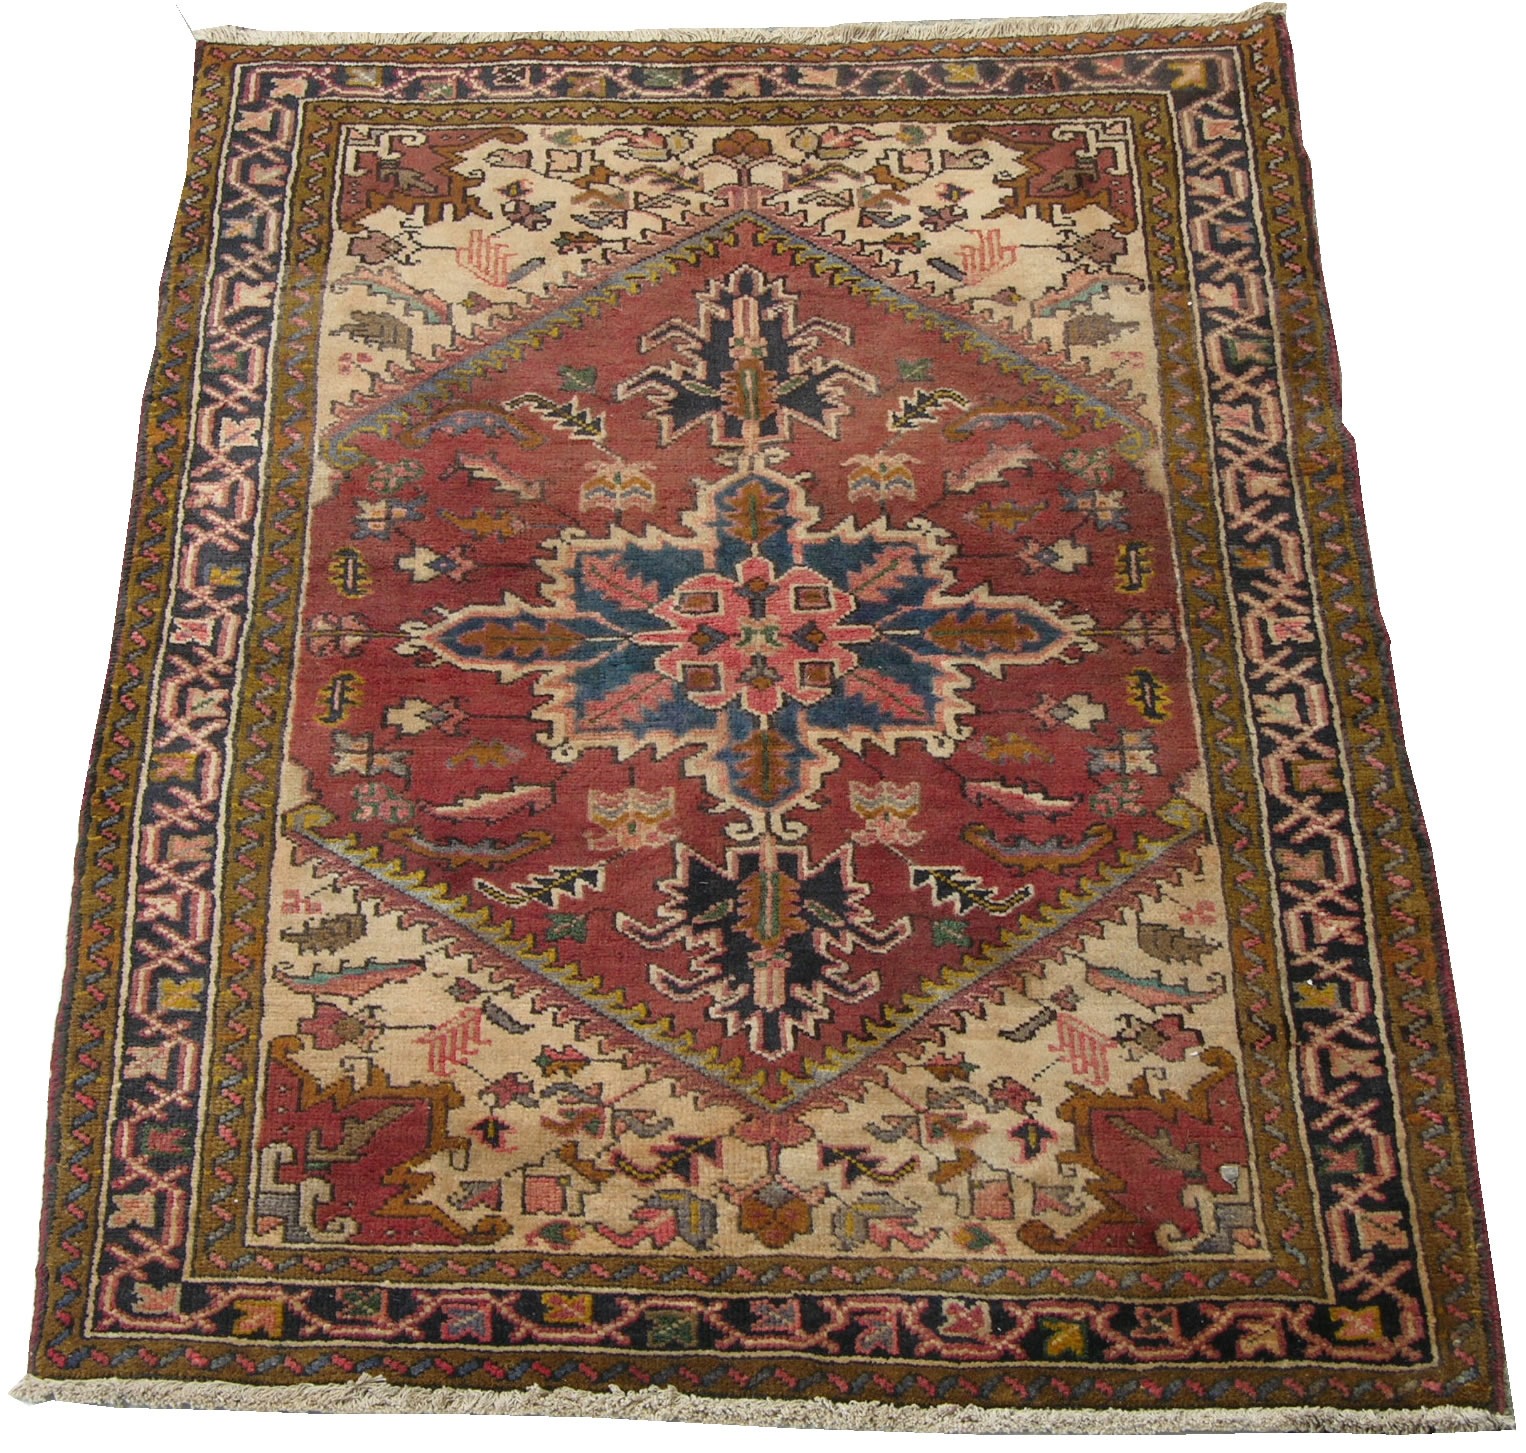 A Small Persian Carpet, 03.08.08, Sold: $207